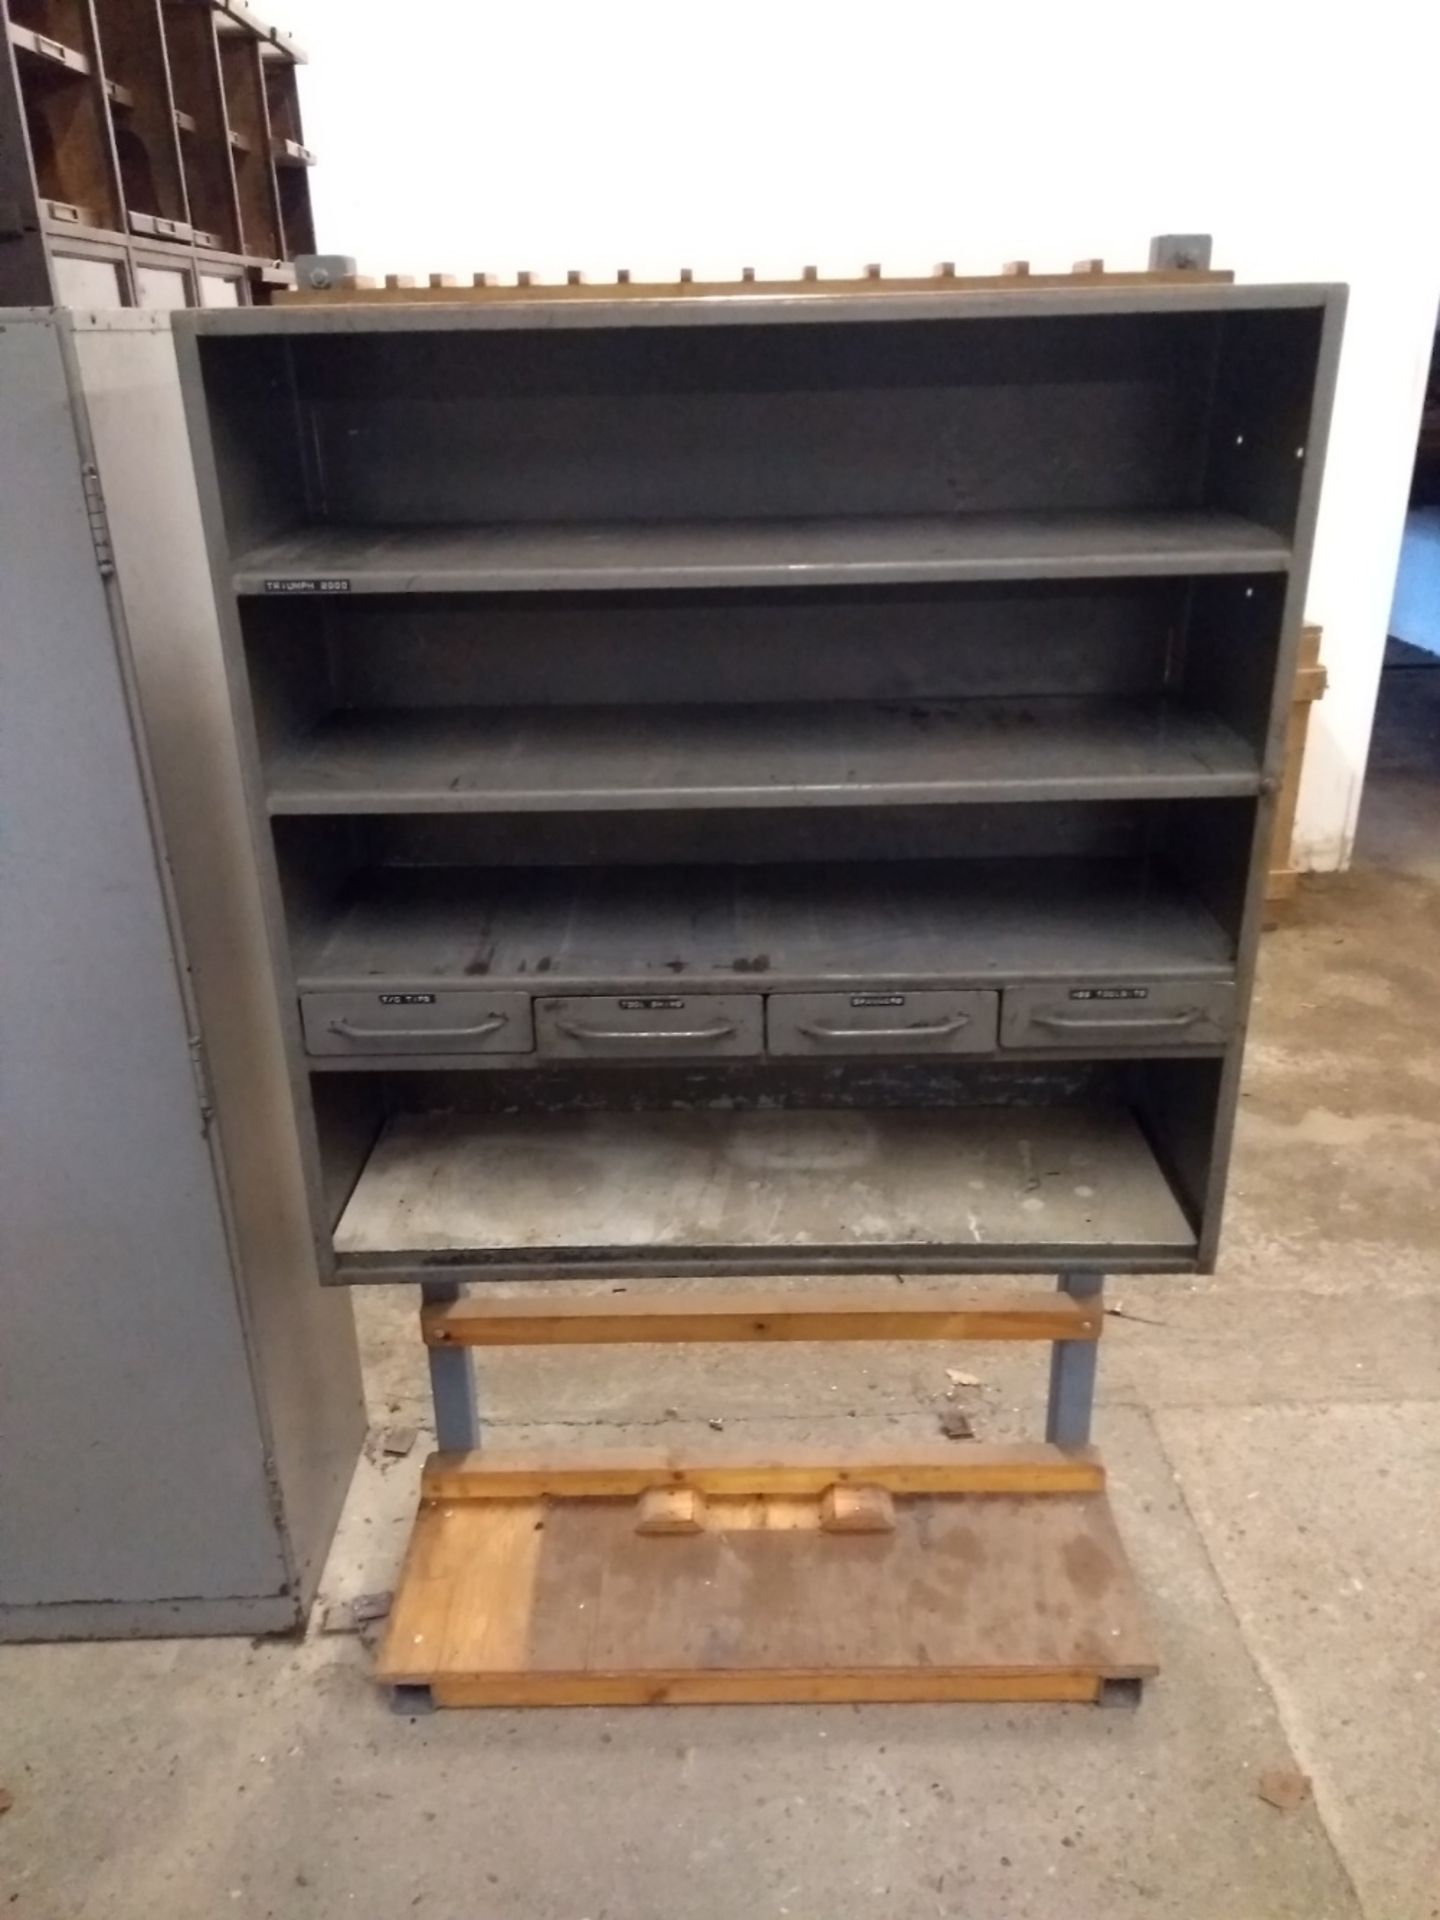 Metal shelving unit - 4 x shelves on metal stand